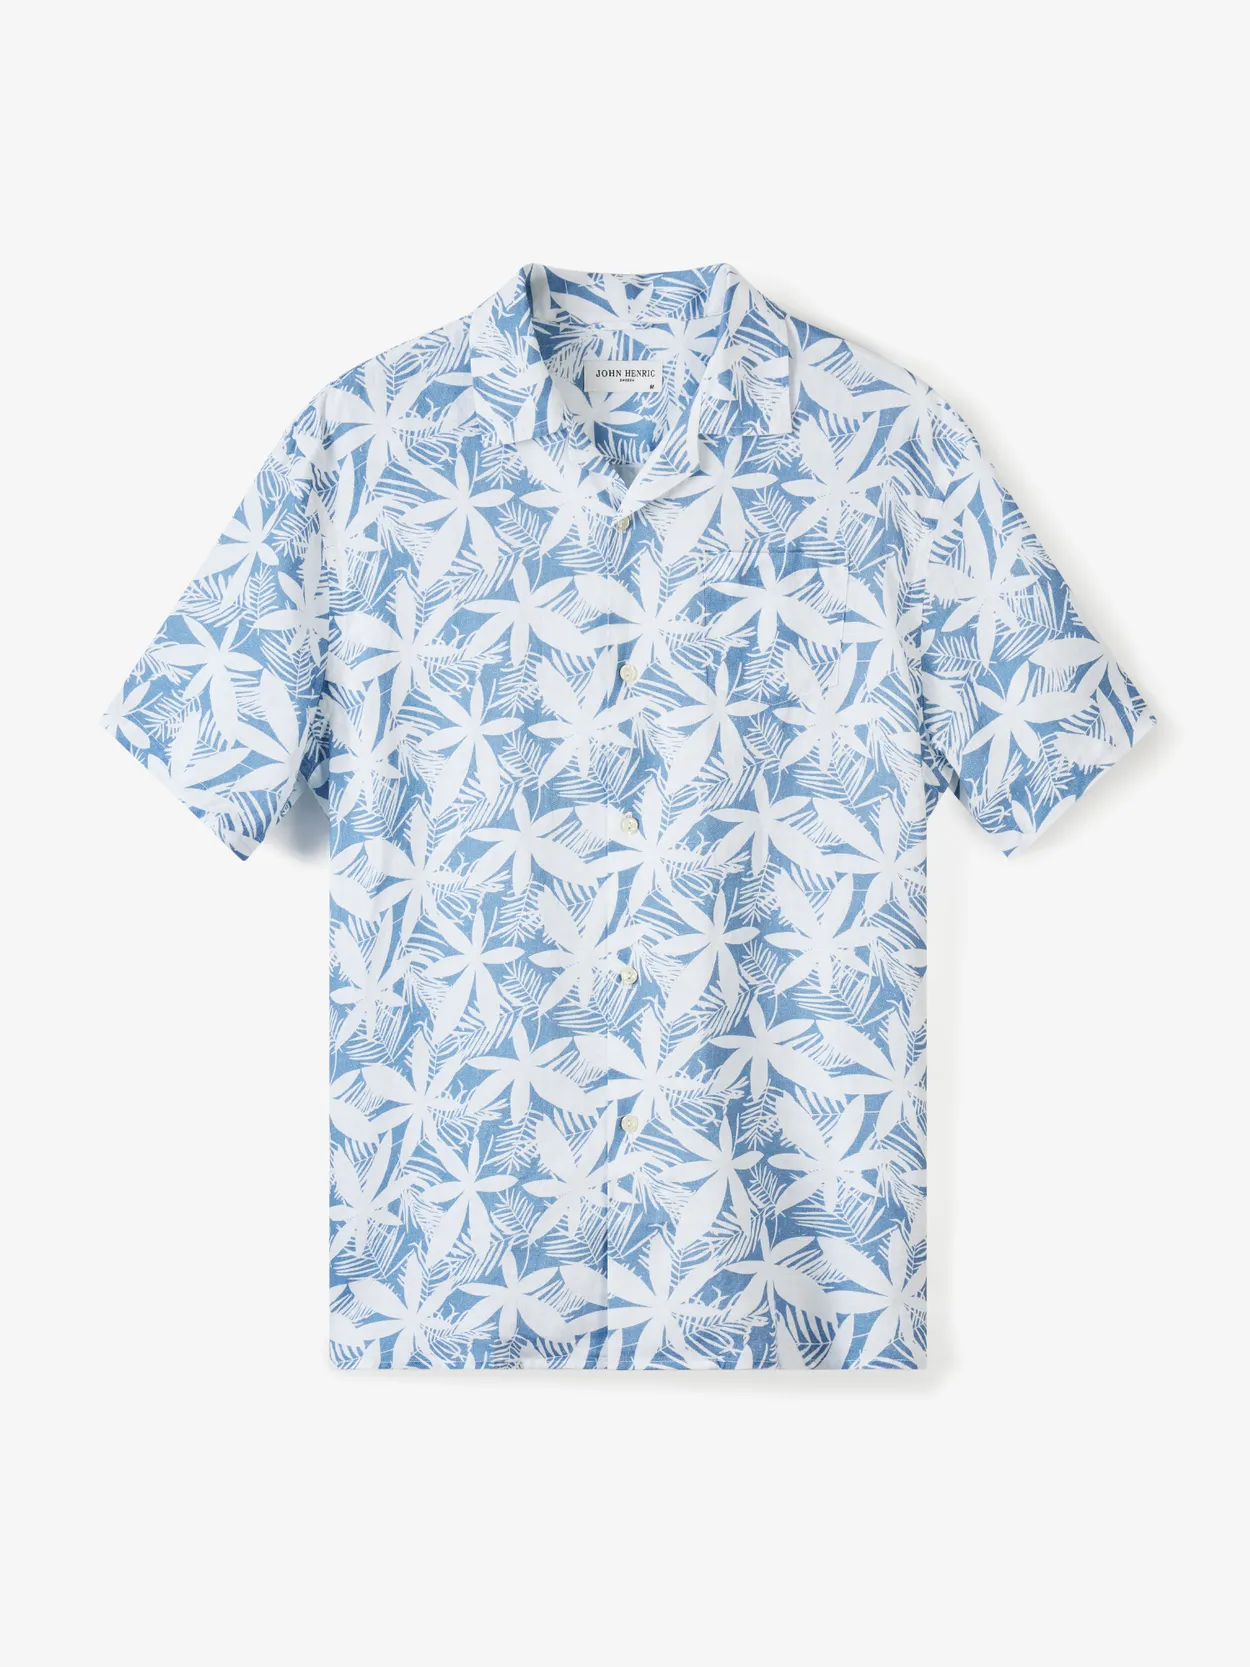 Men's Short Sleeve Shirts, Hawaiian Linen & Casual